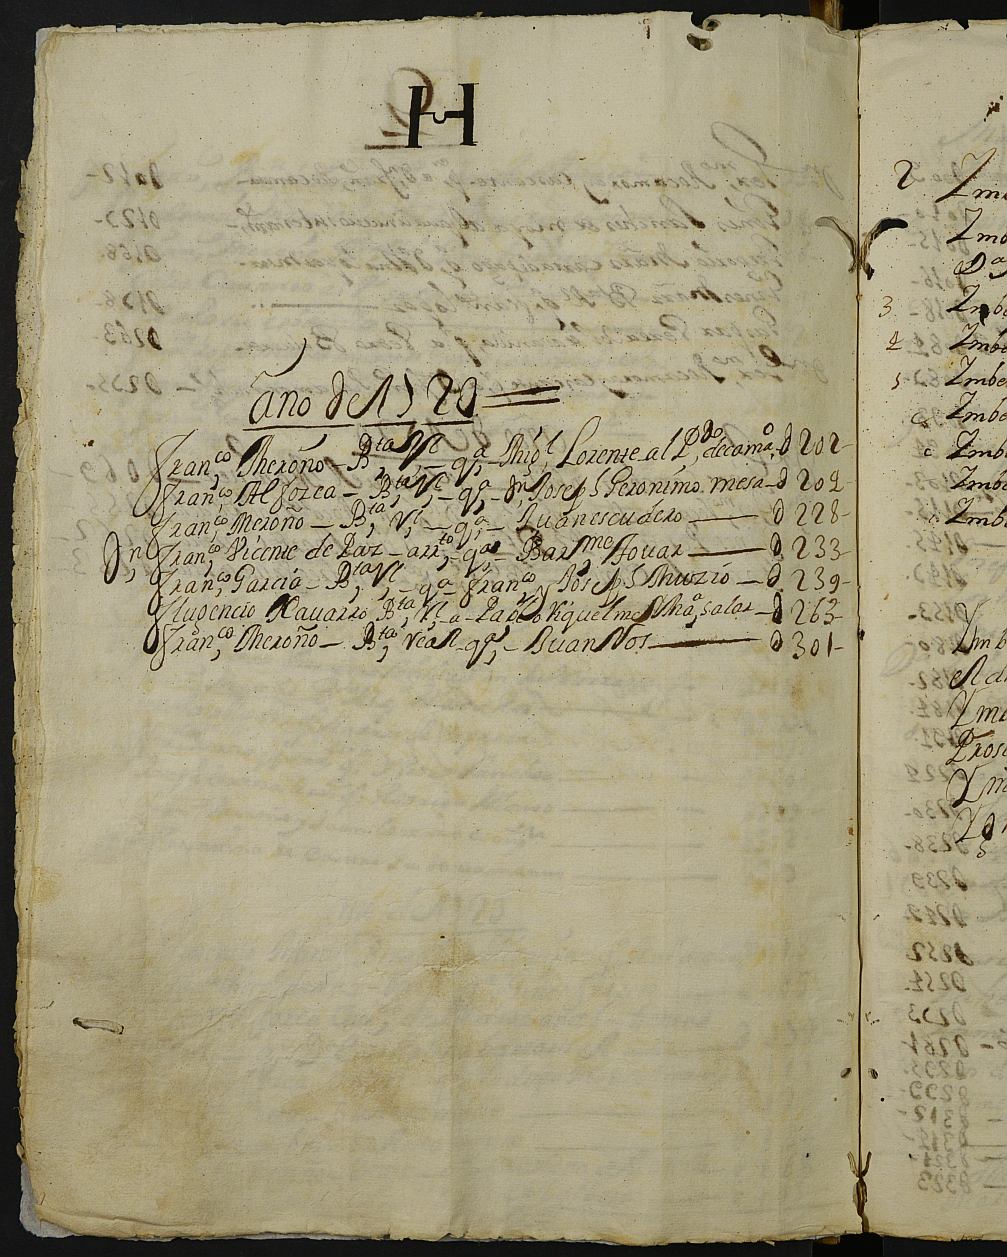 Registro de Jorge Pérez Mesía, Murcia de 1719-1720.